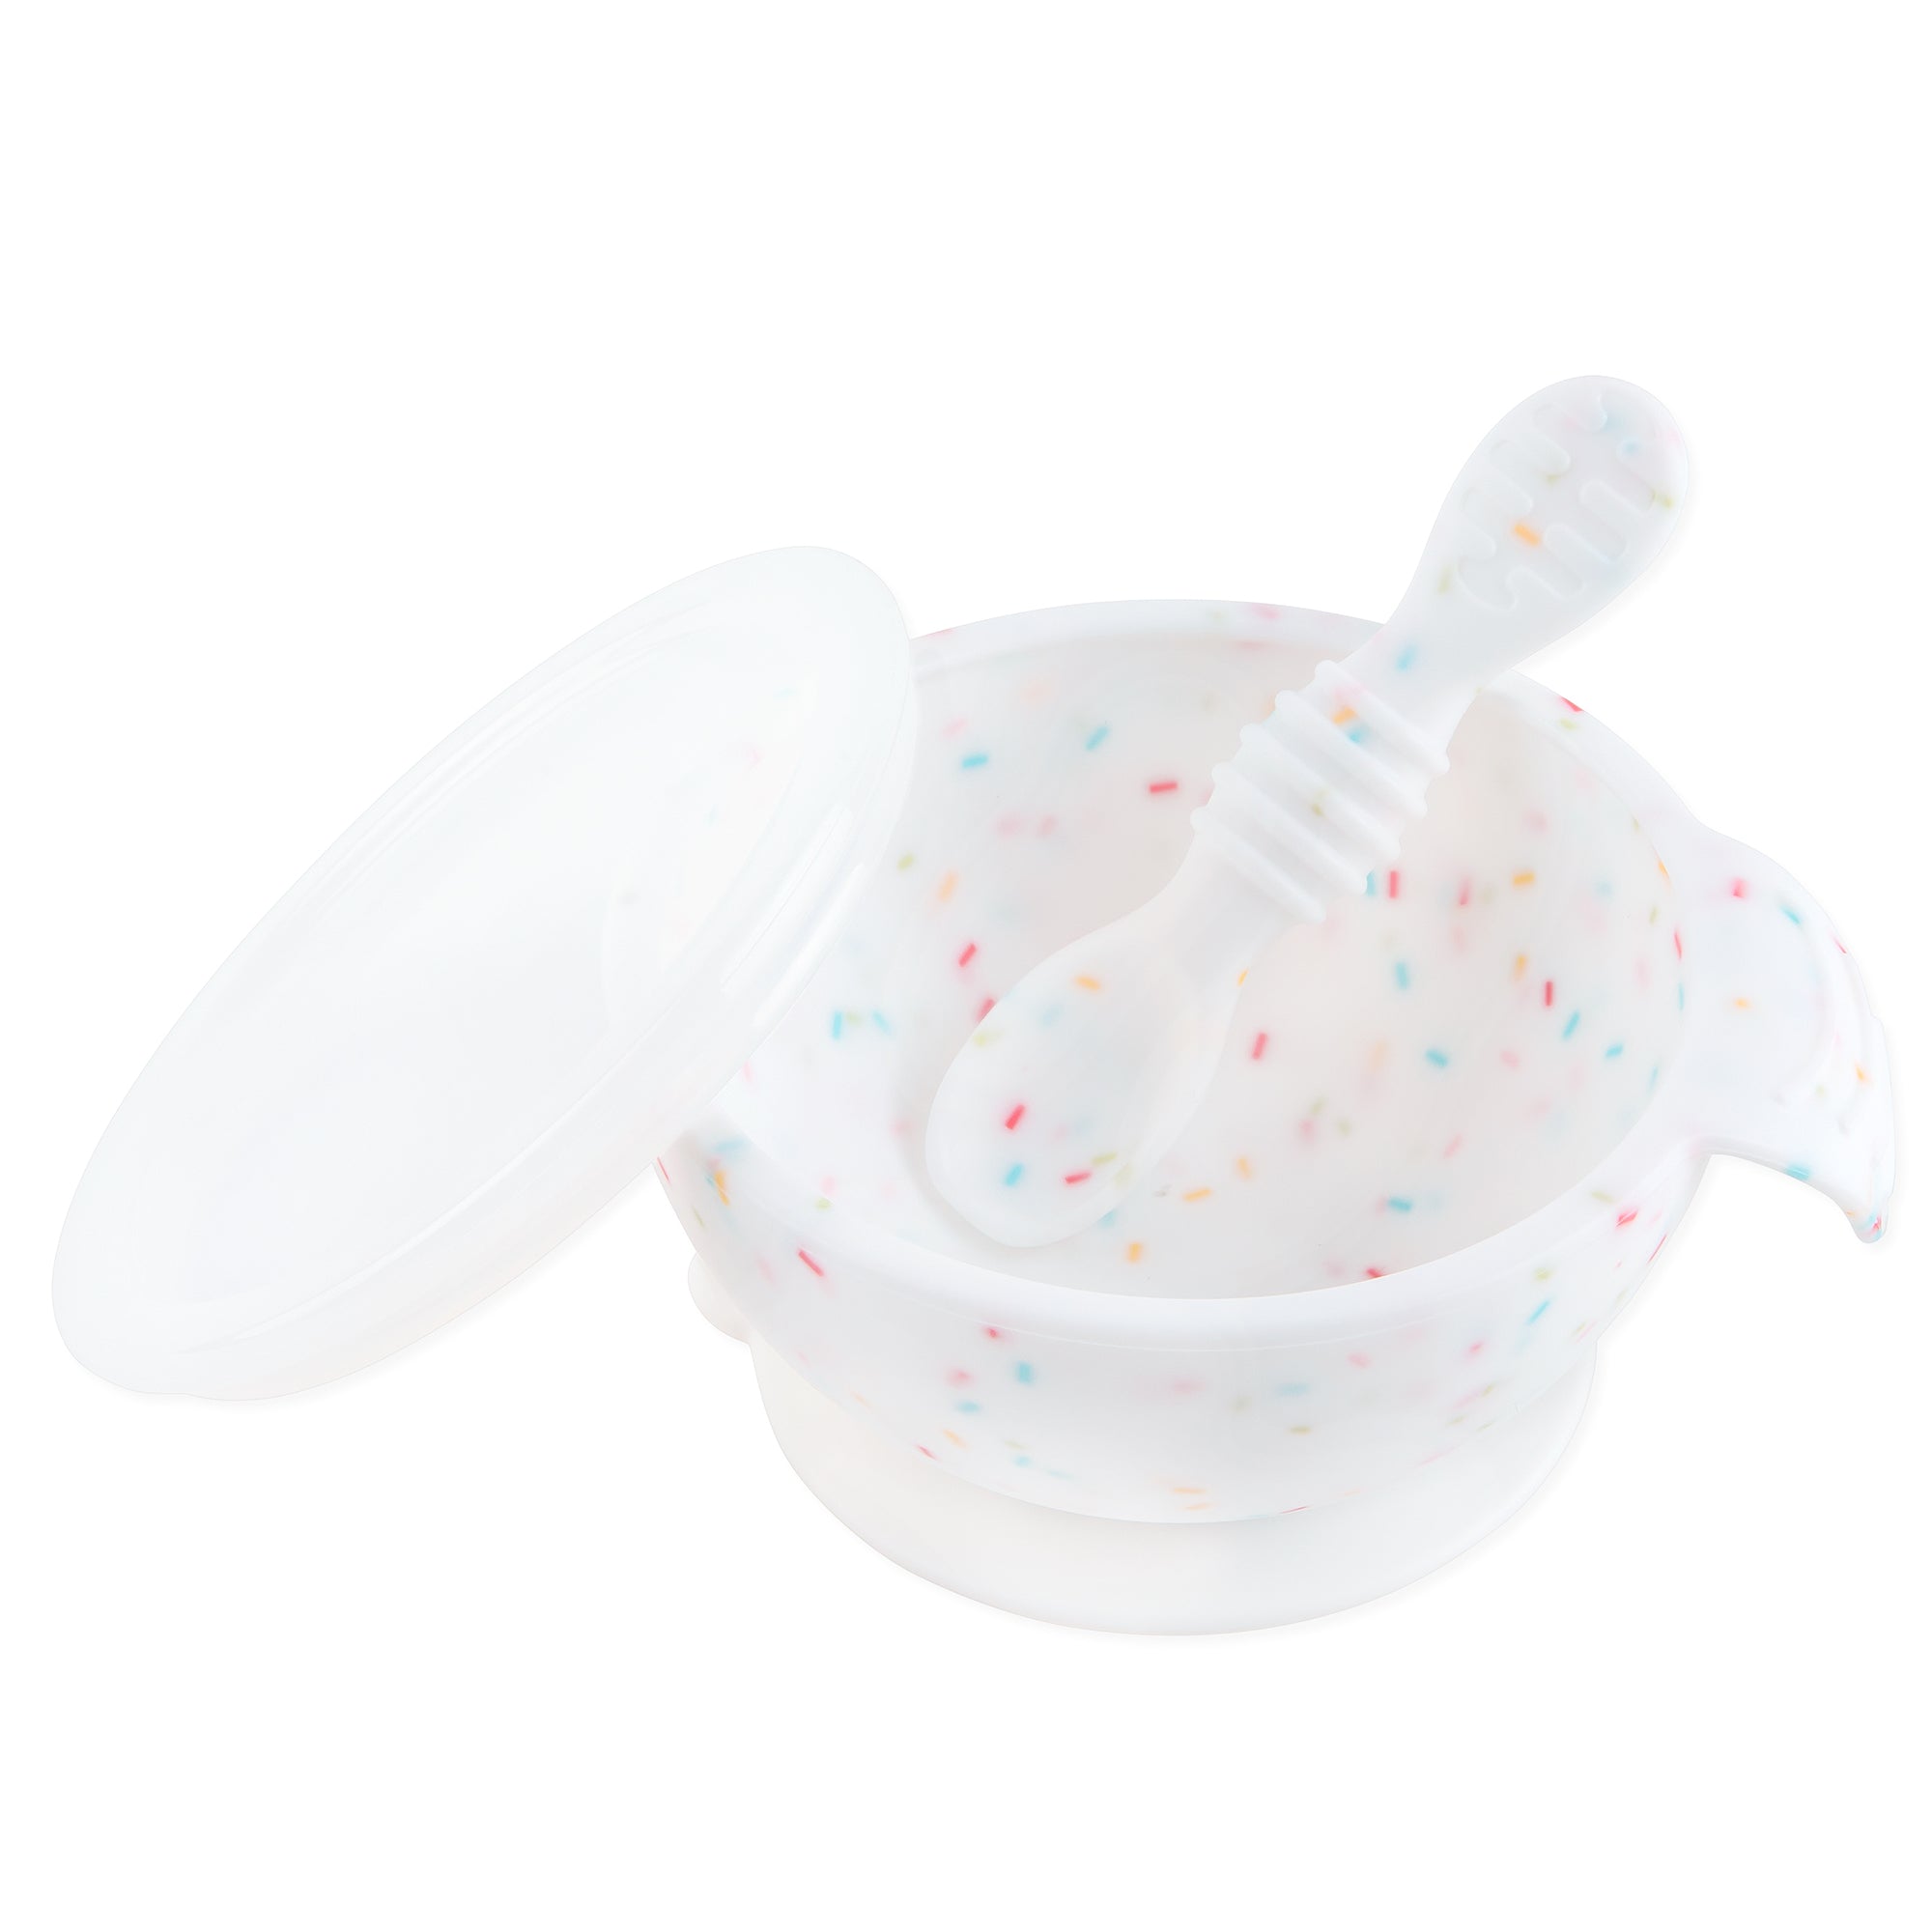 Vanilla Sprinkle Silicone Feeding Set: Baby Bowl & Training Spoon